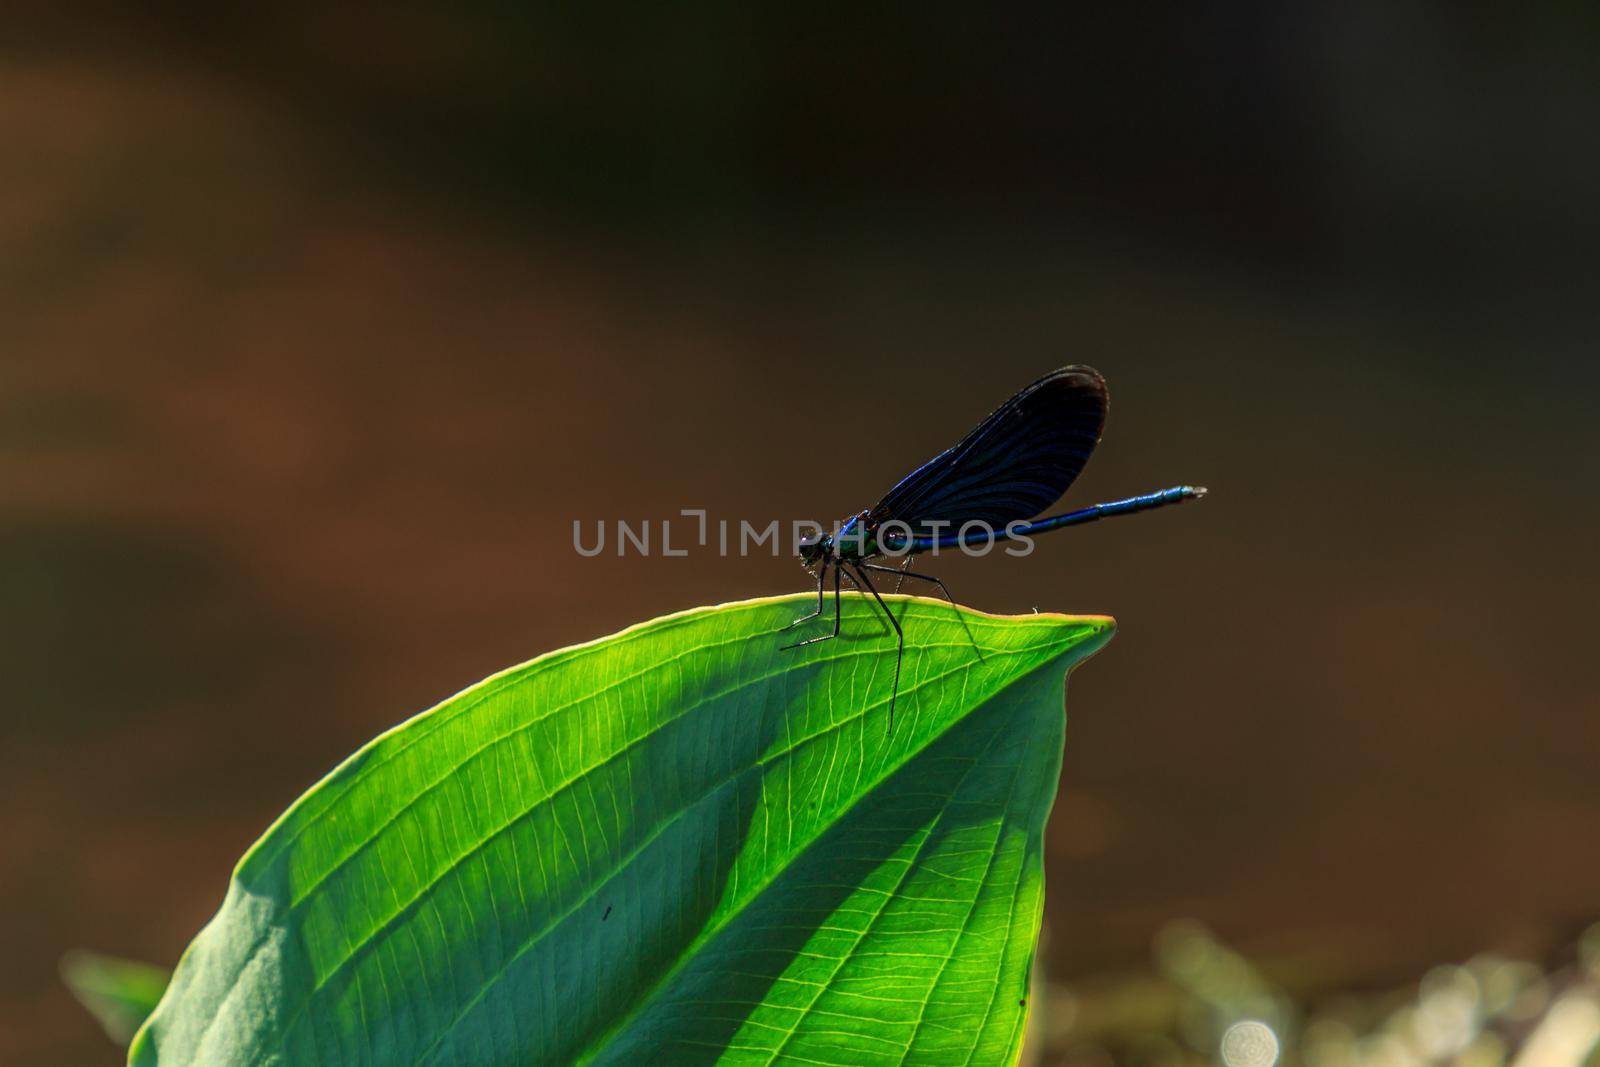 Blue dragonfly sitting on green river leaf